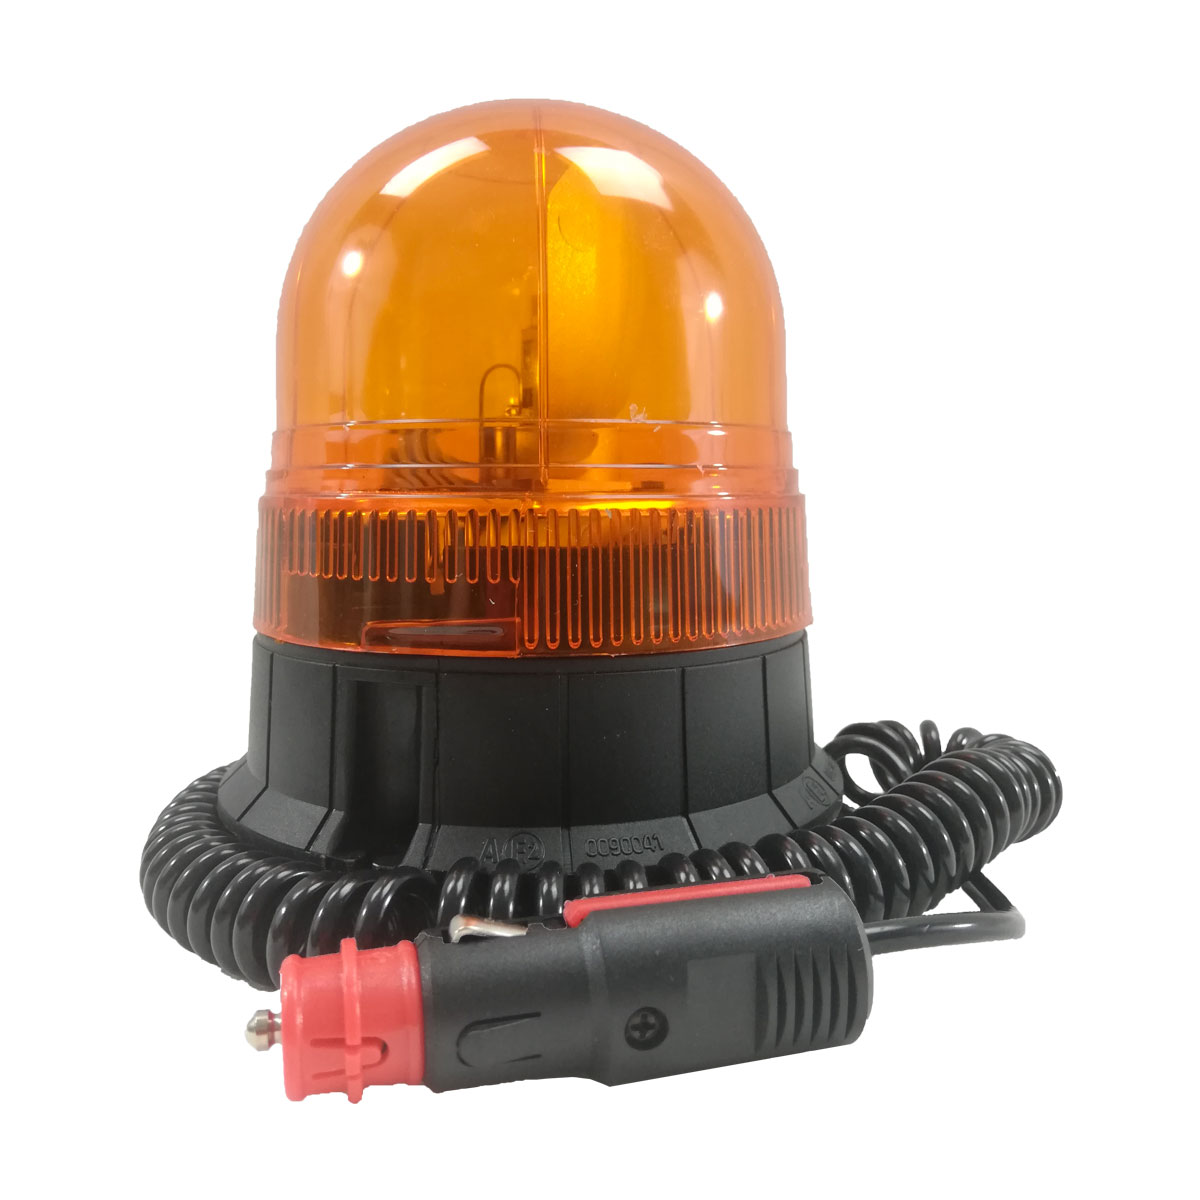 Gyrophare compact orange • câble 3m spiralé avec prise allume-cigare • Hauteur verrine 120 mm